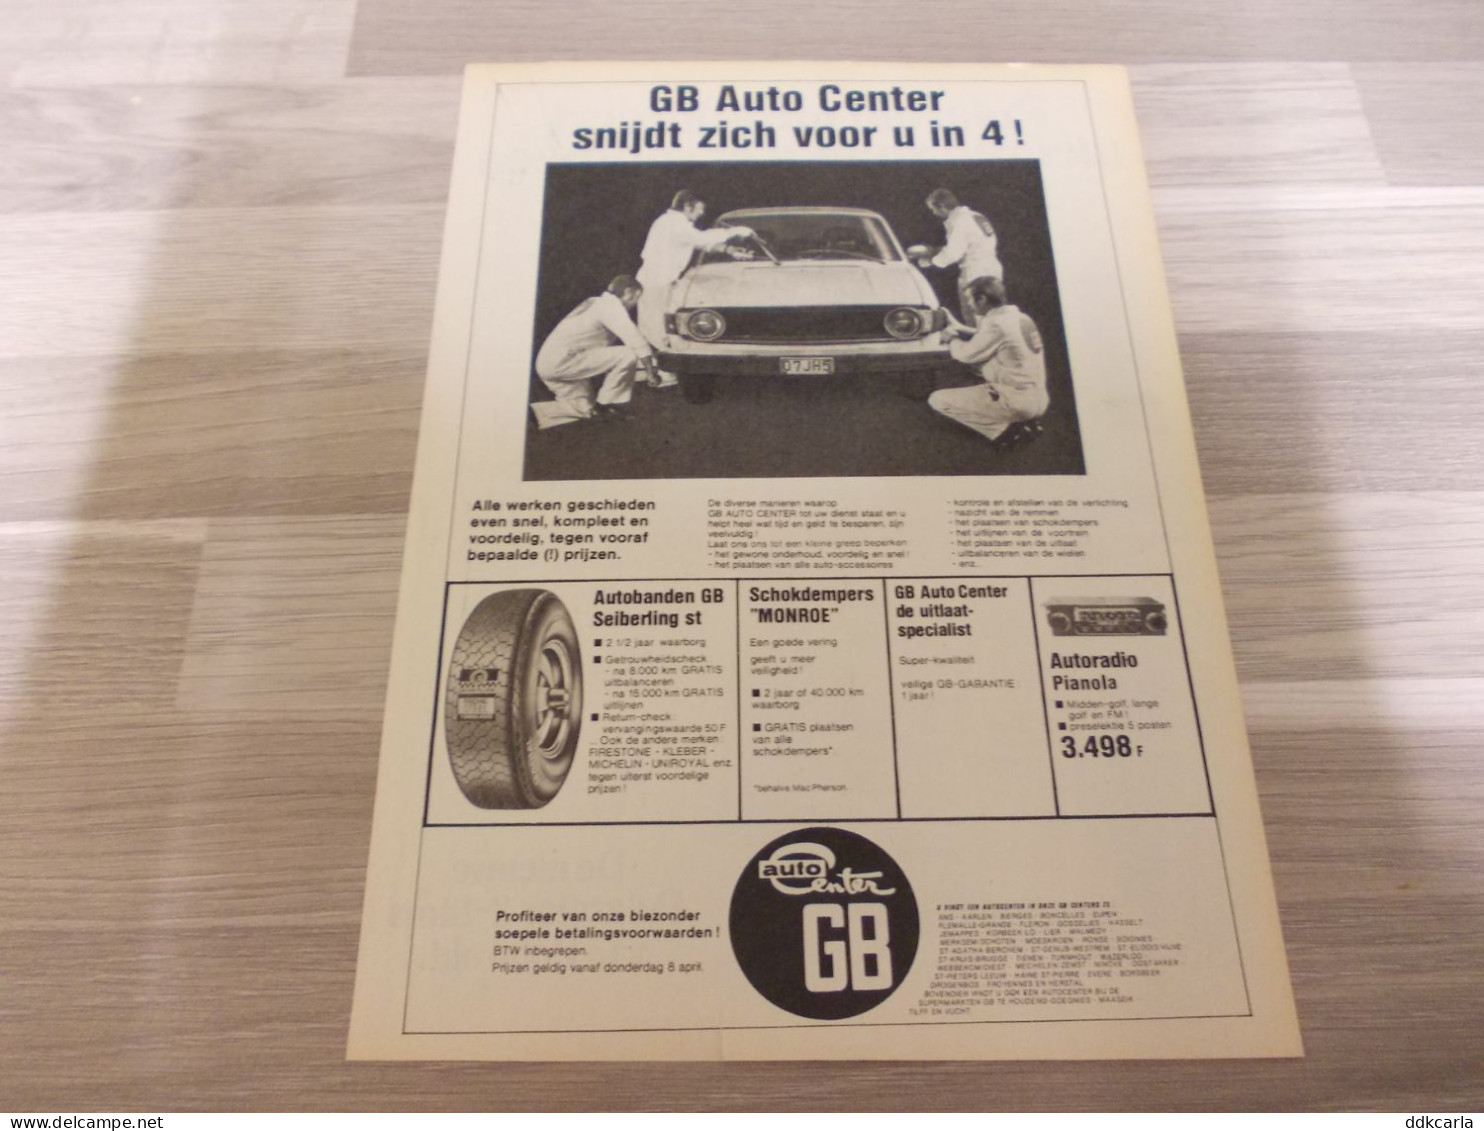 Reclame Advertentie Uit Oud Tijdschrift 1976 - GB Auto Center - Volvo - Werbung